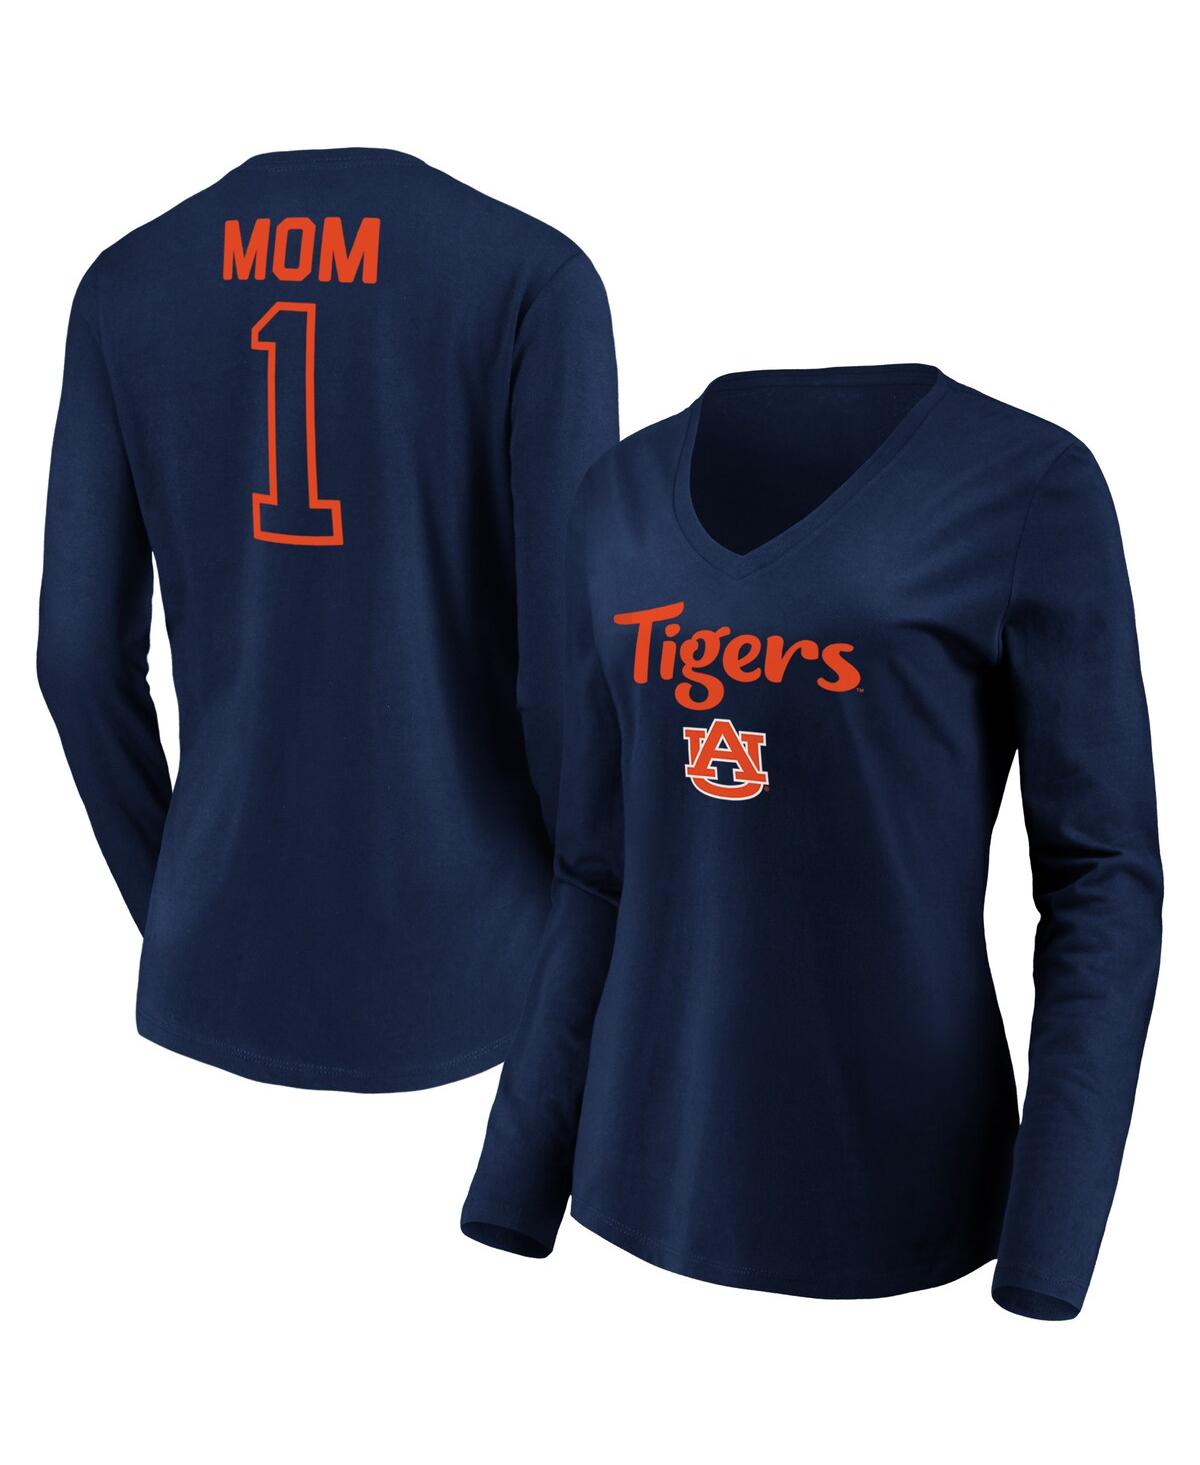 Fanatics Women's  Navy Auburn Tigers #1 Mom Long Sleeve V-neck T-shirt